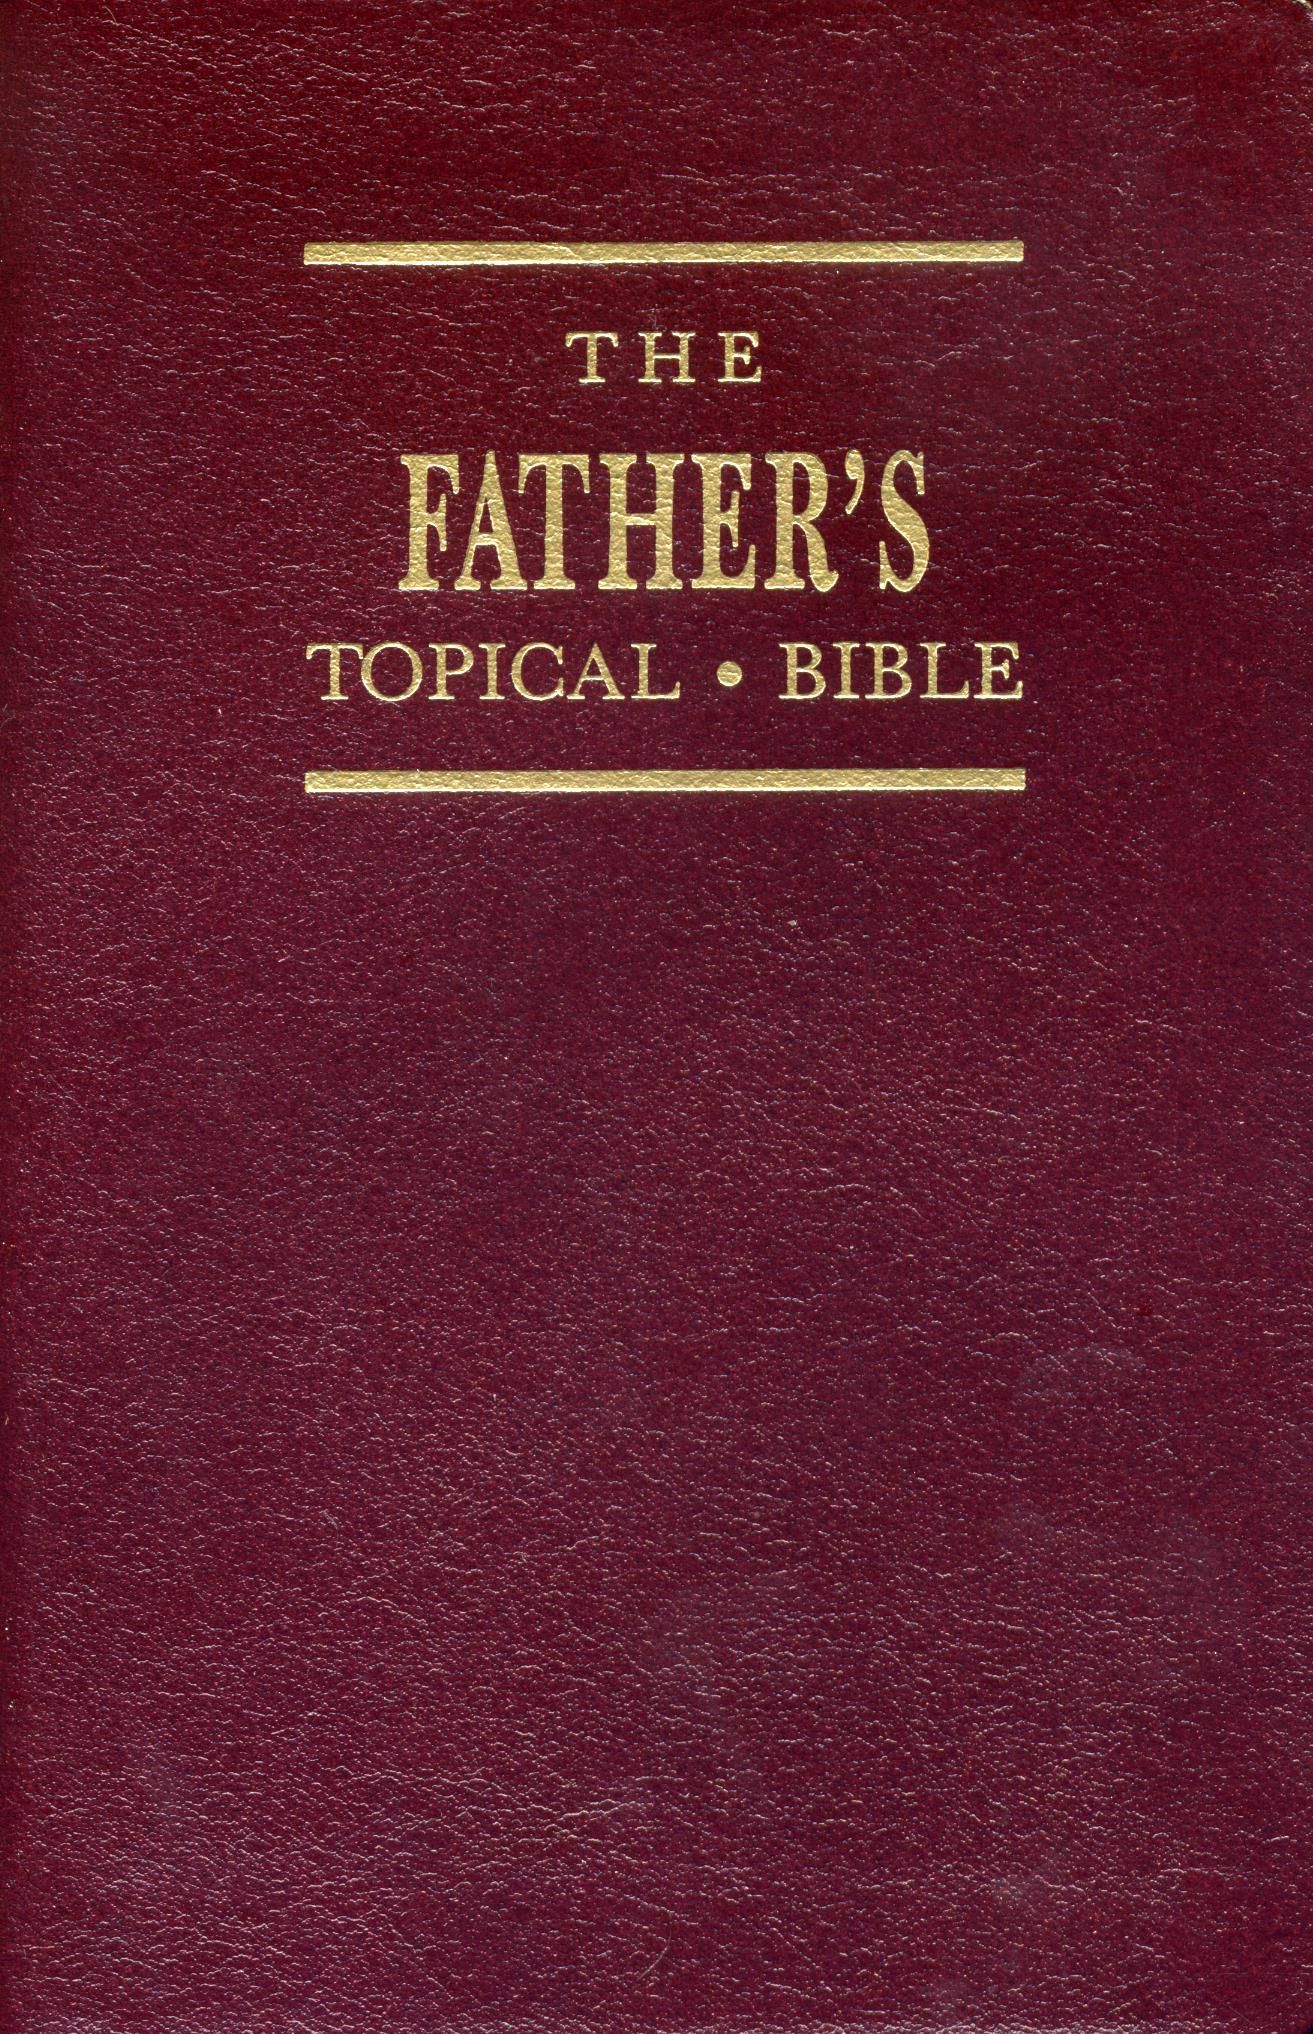 Englische Bücher - Bibeln - Harrison House: The Father's Topical Bible